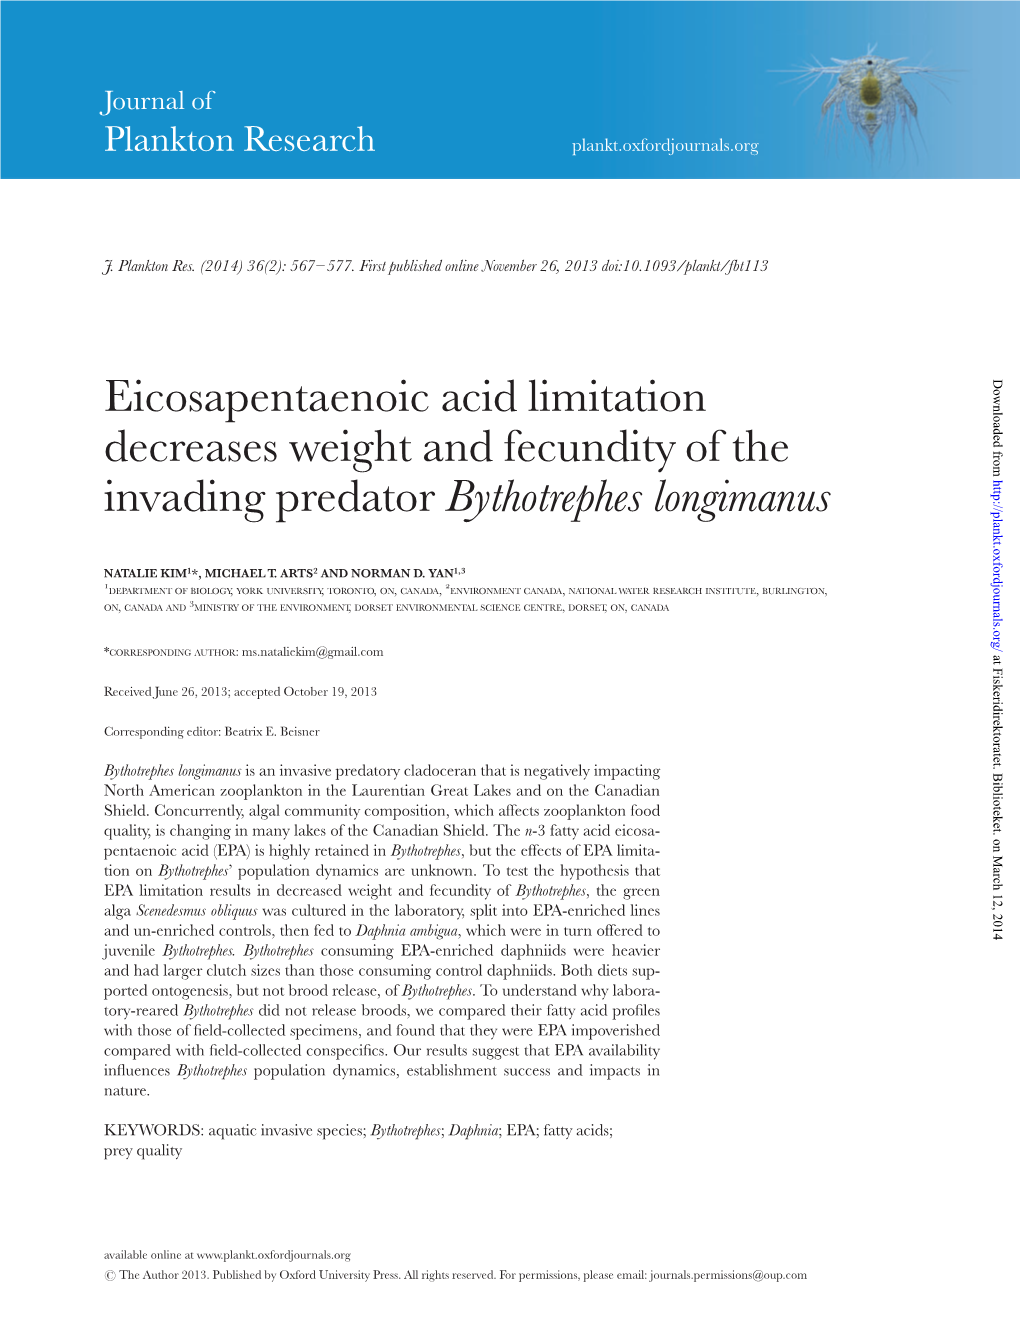 Eicosapentaenoic Acid Limitation Decreases Weight and Fecundity Of